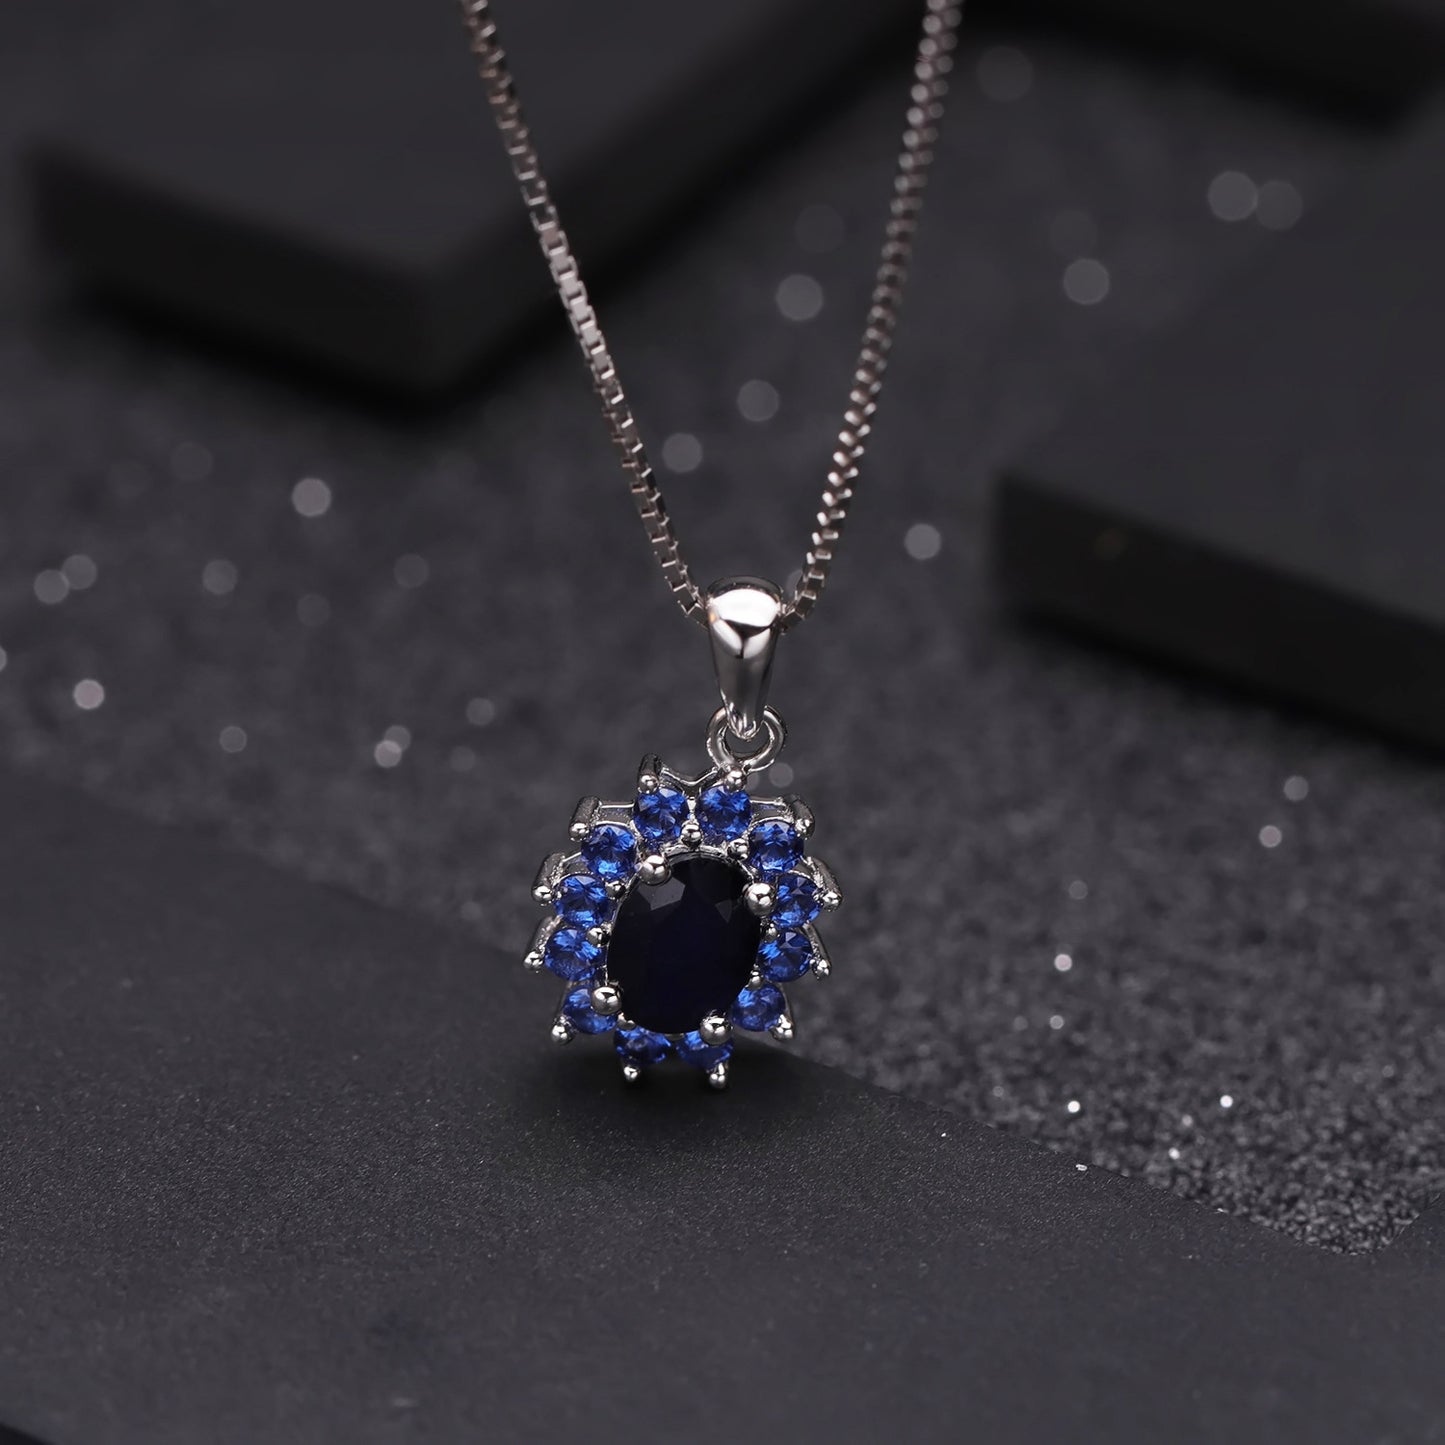 European Design Inlaid Sapphire Pendant Silver Necklace for Women